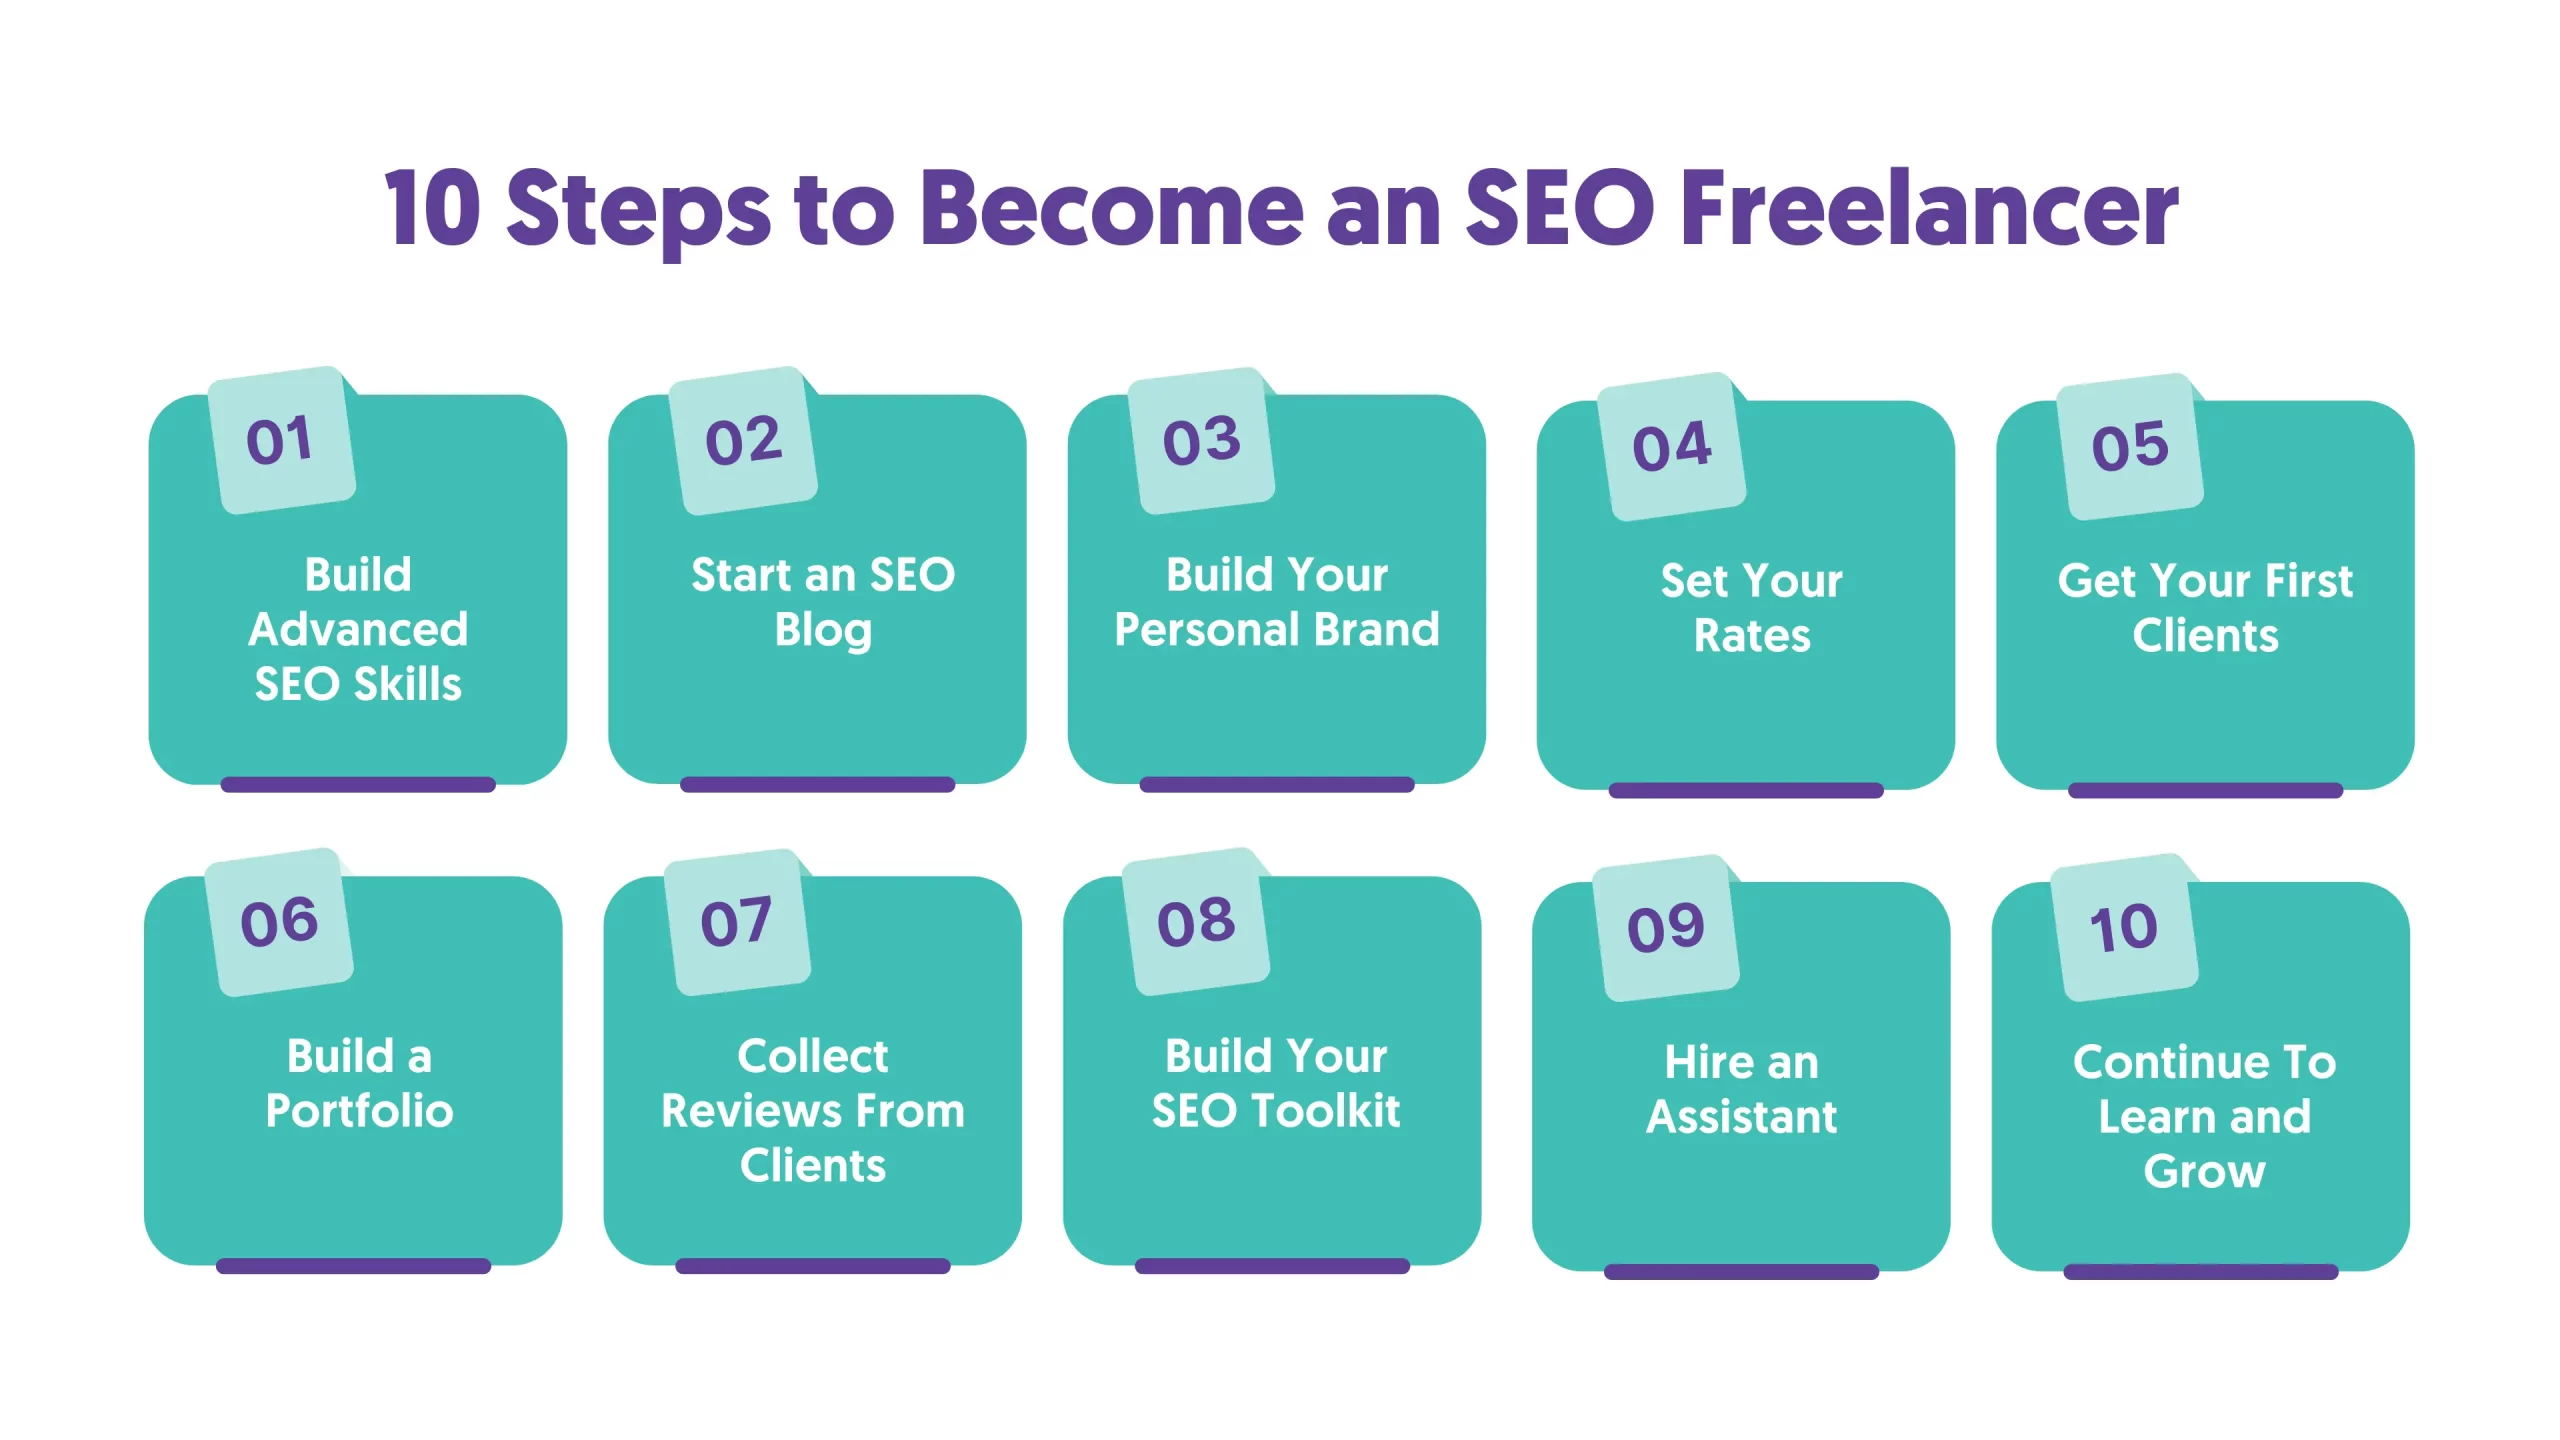 Steps to Become an SEO Freelancer